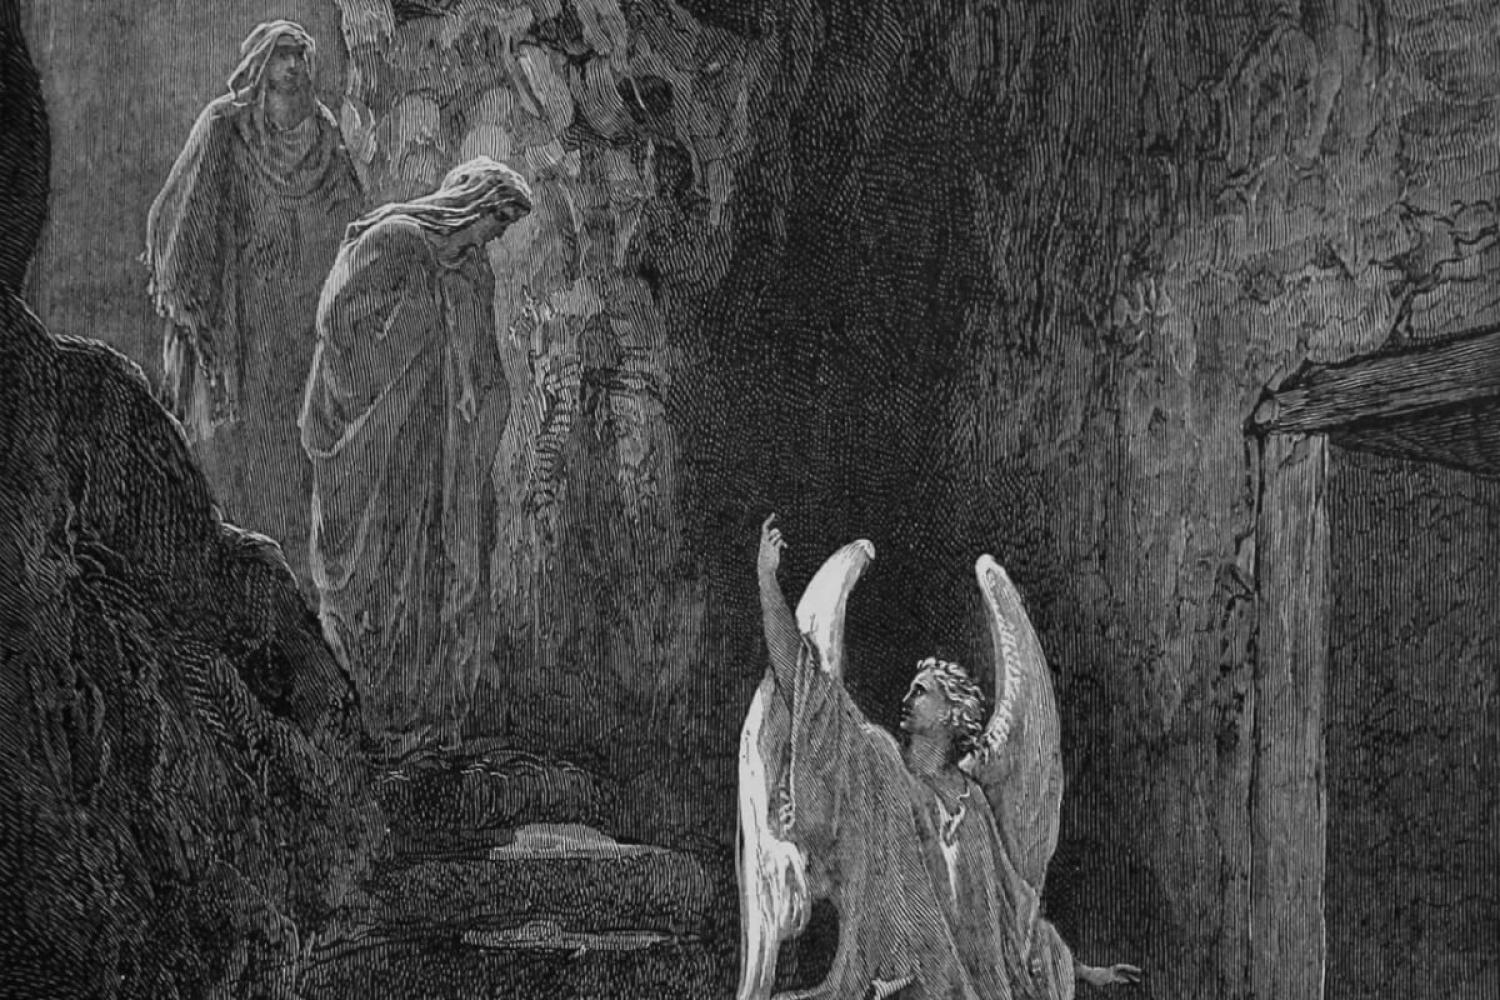 Gustave Dore's "The Resurrection"